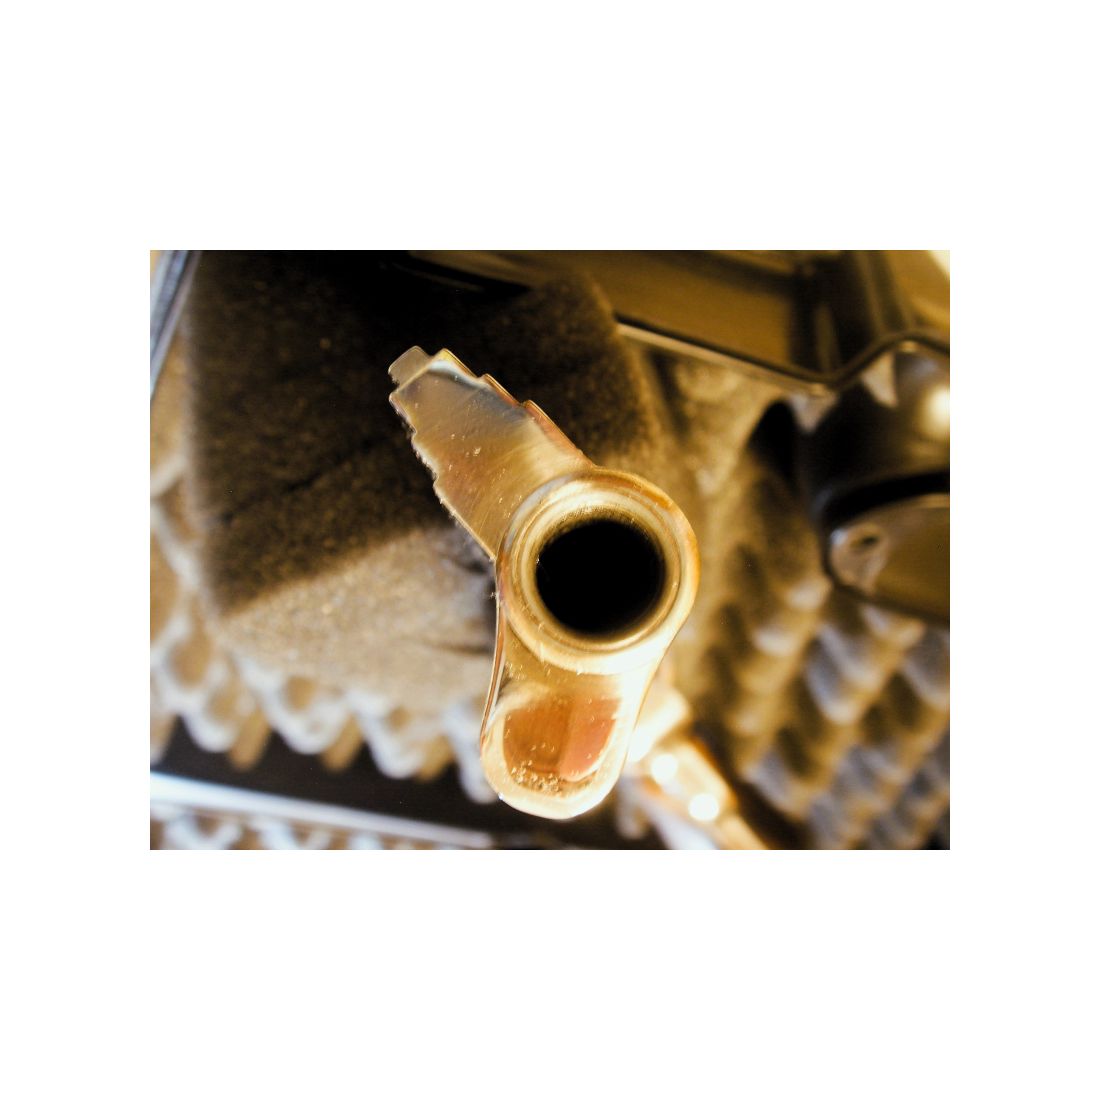 Reck SA .45 Magnum Revolver Chrom m. Holzgriffschalen, ungeschossen